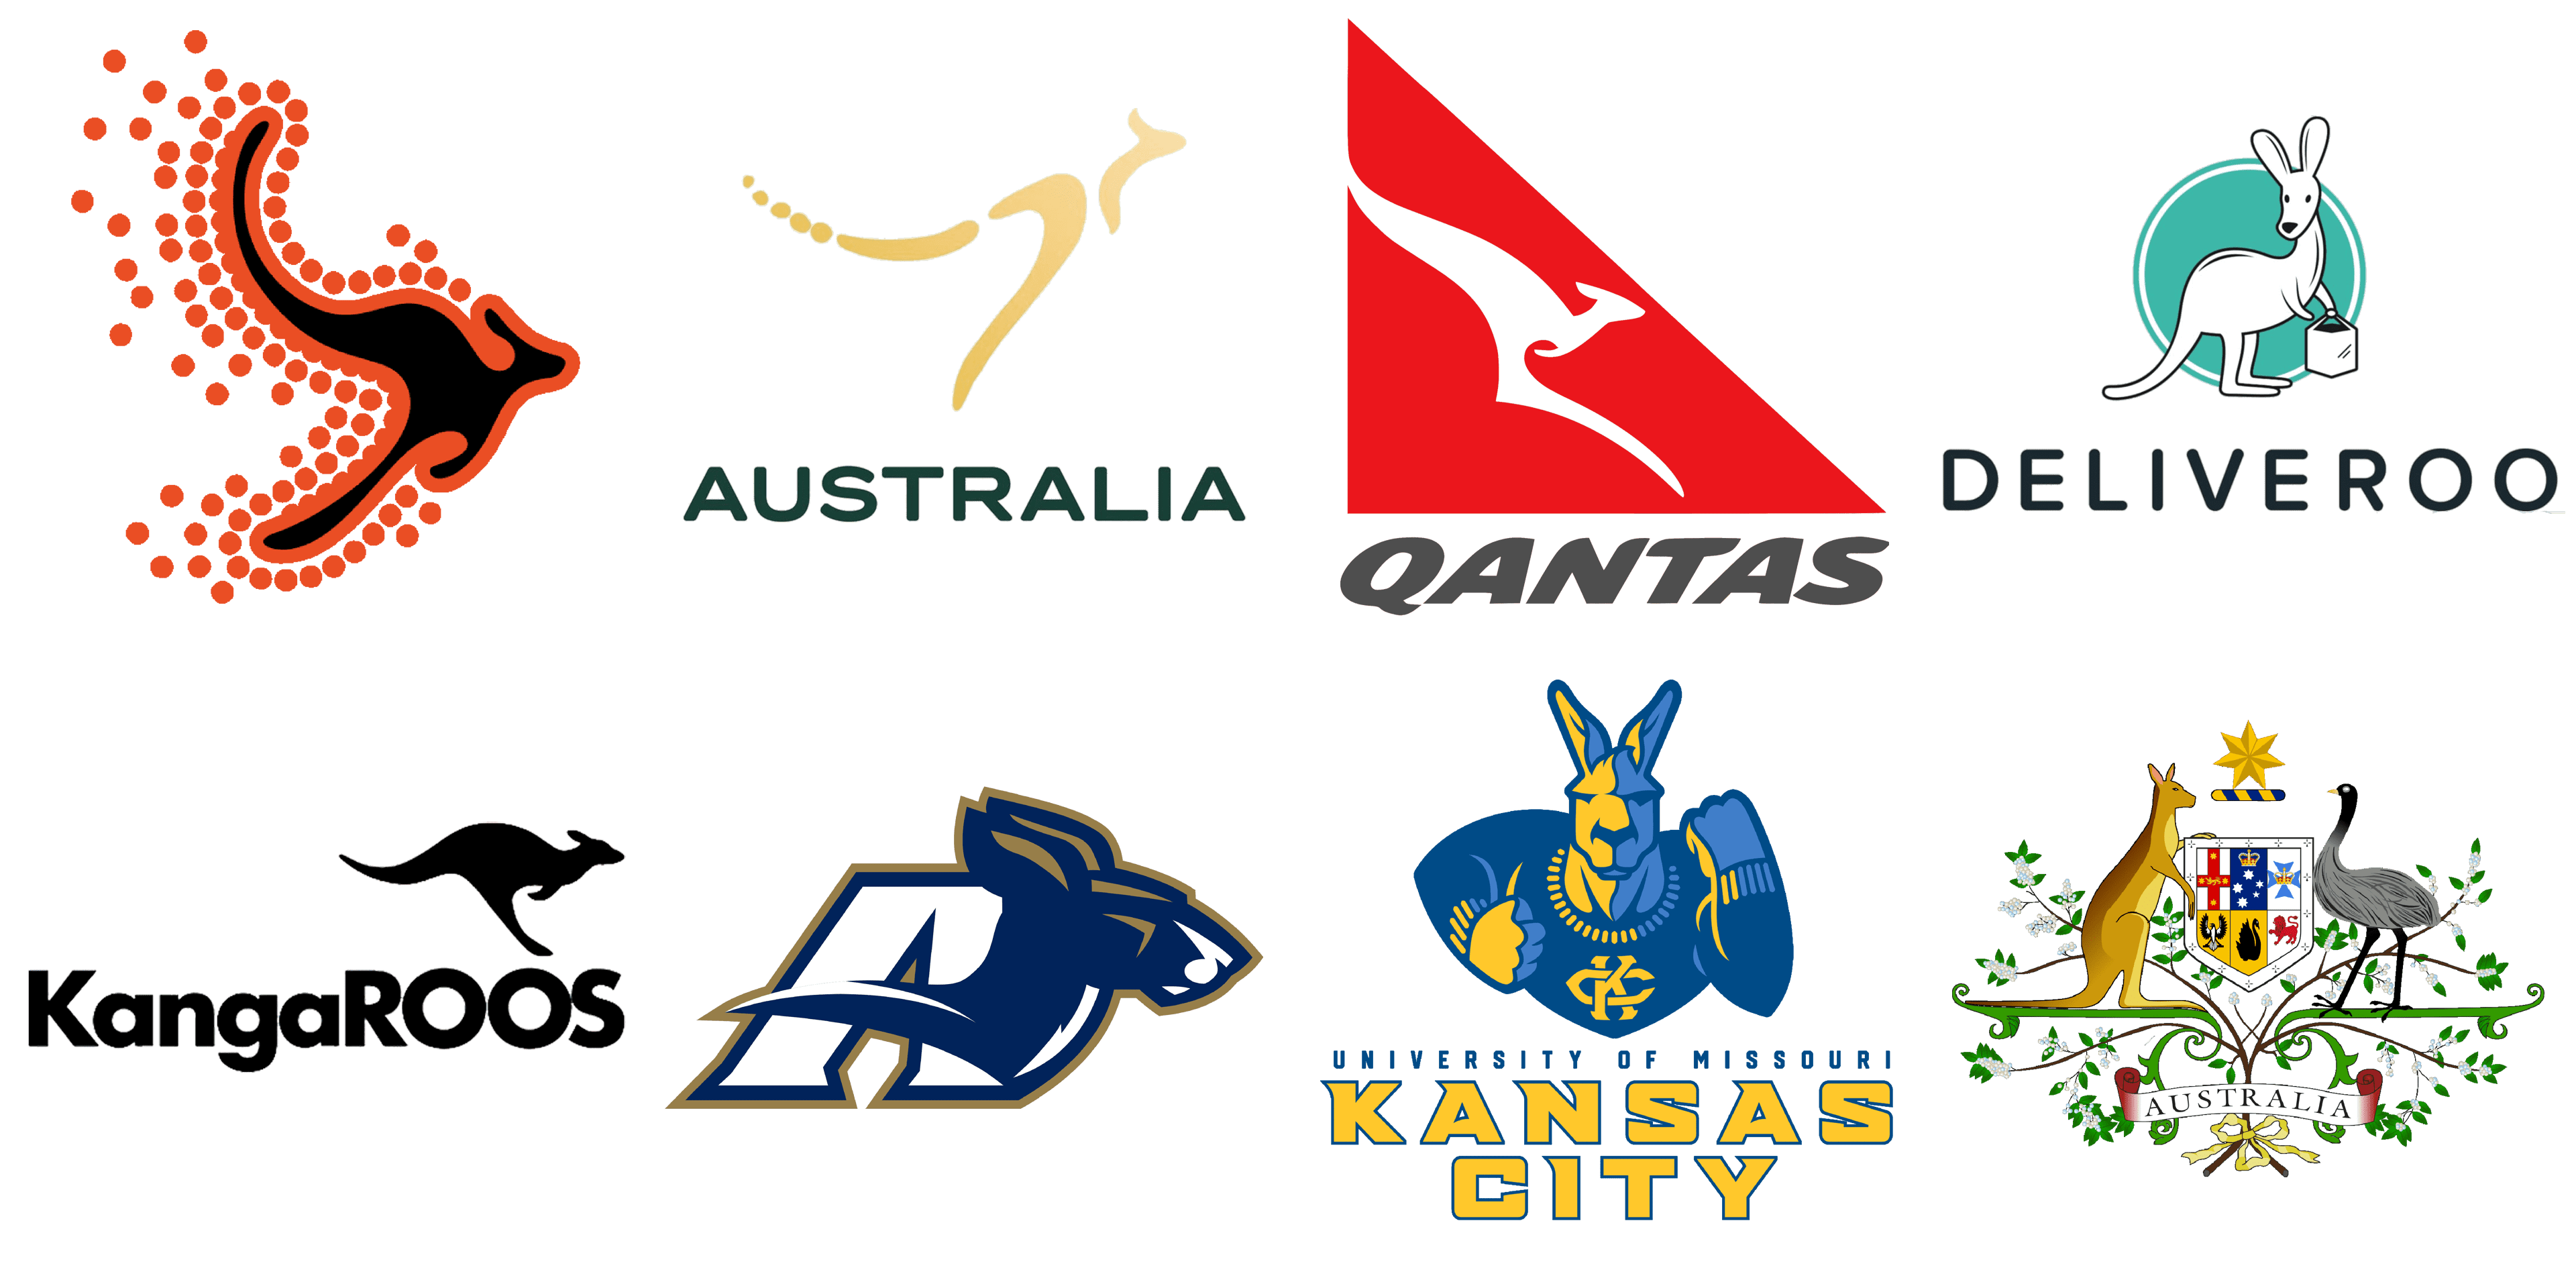 Logos With Kangaroo Most a Famous